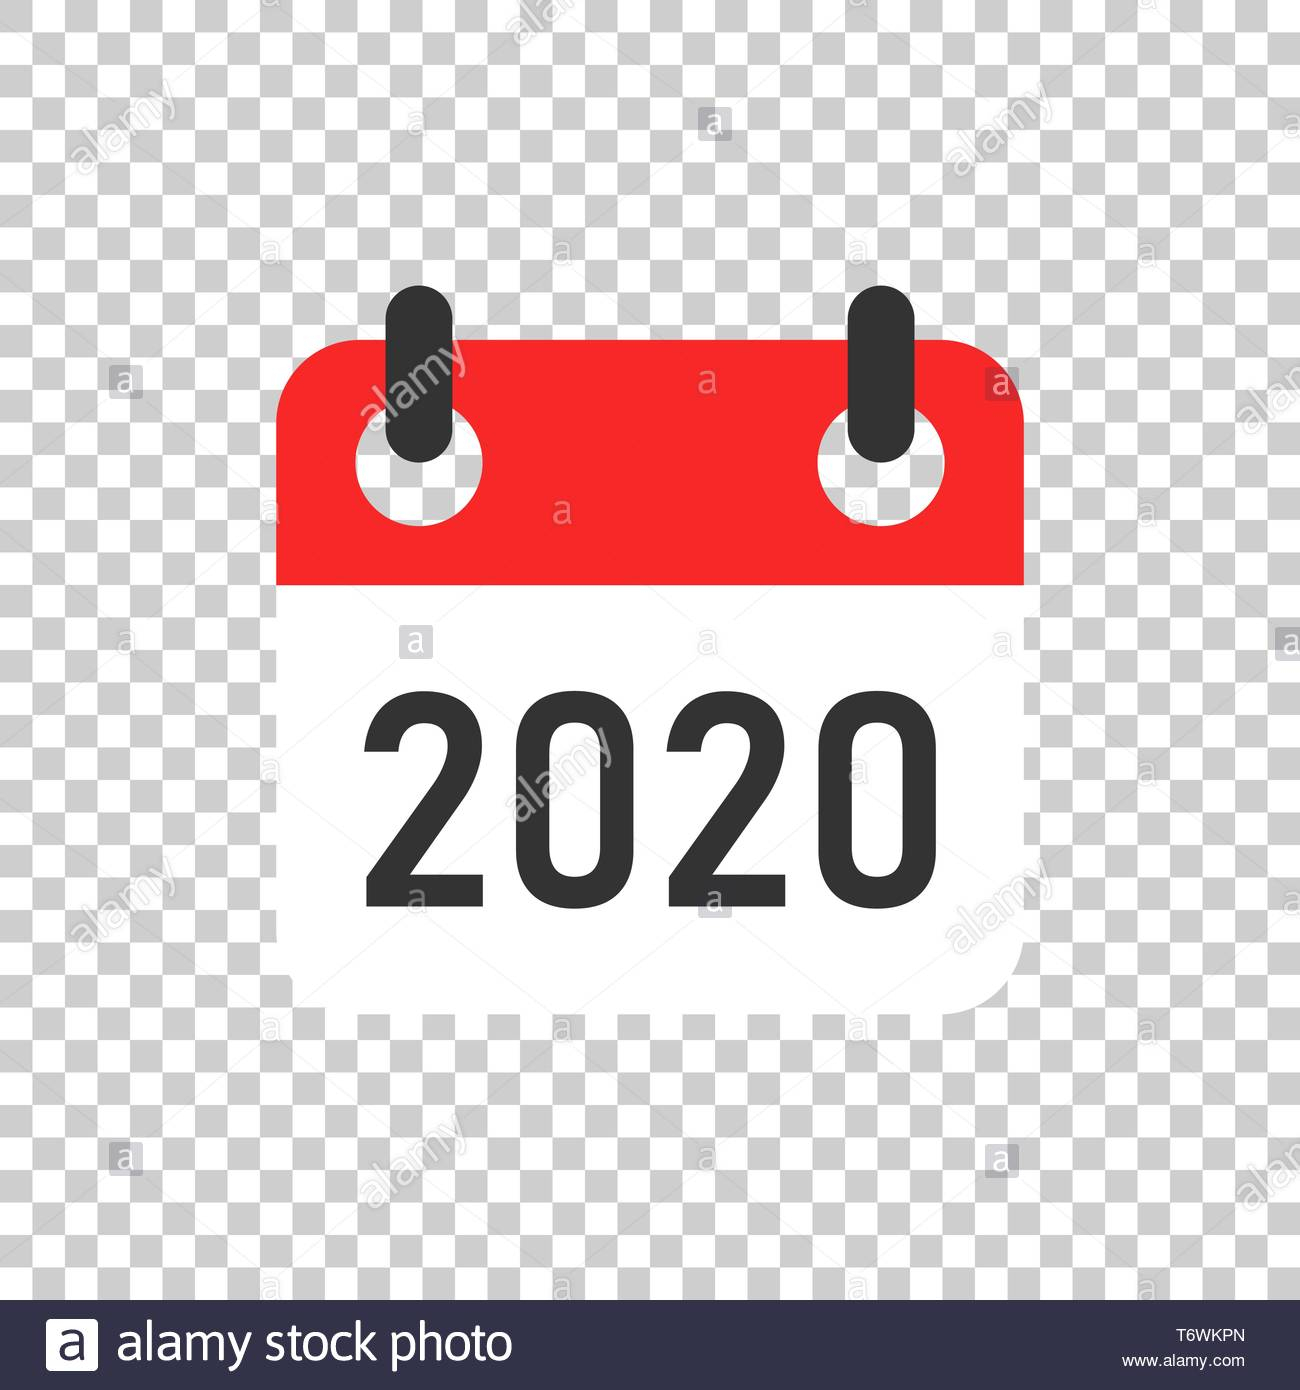 Calendar 2020 Organizer Icon In Transparent Style within November Calendar 2020 Transparent